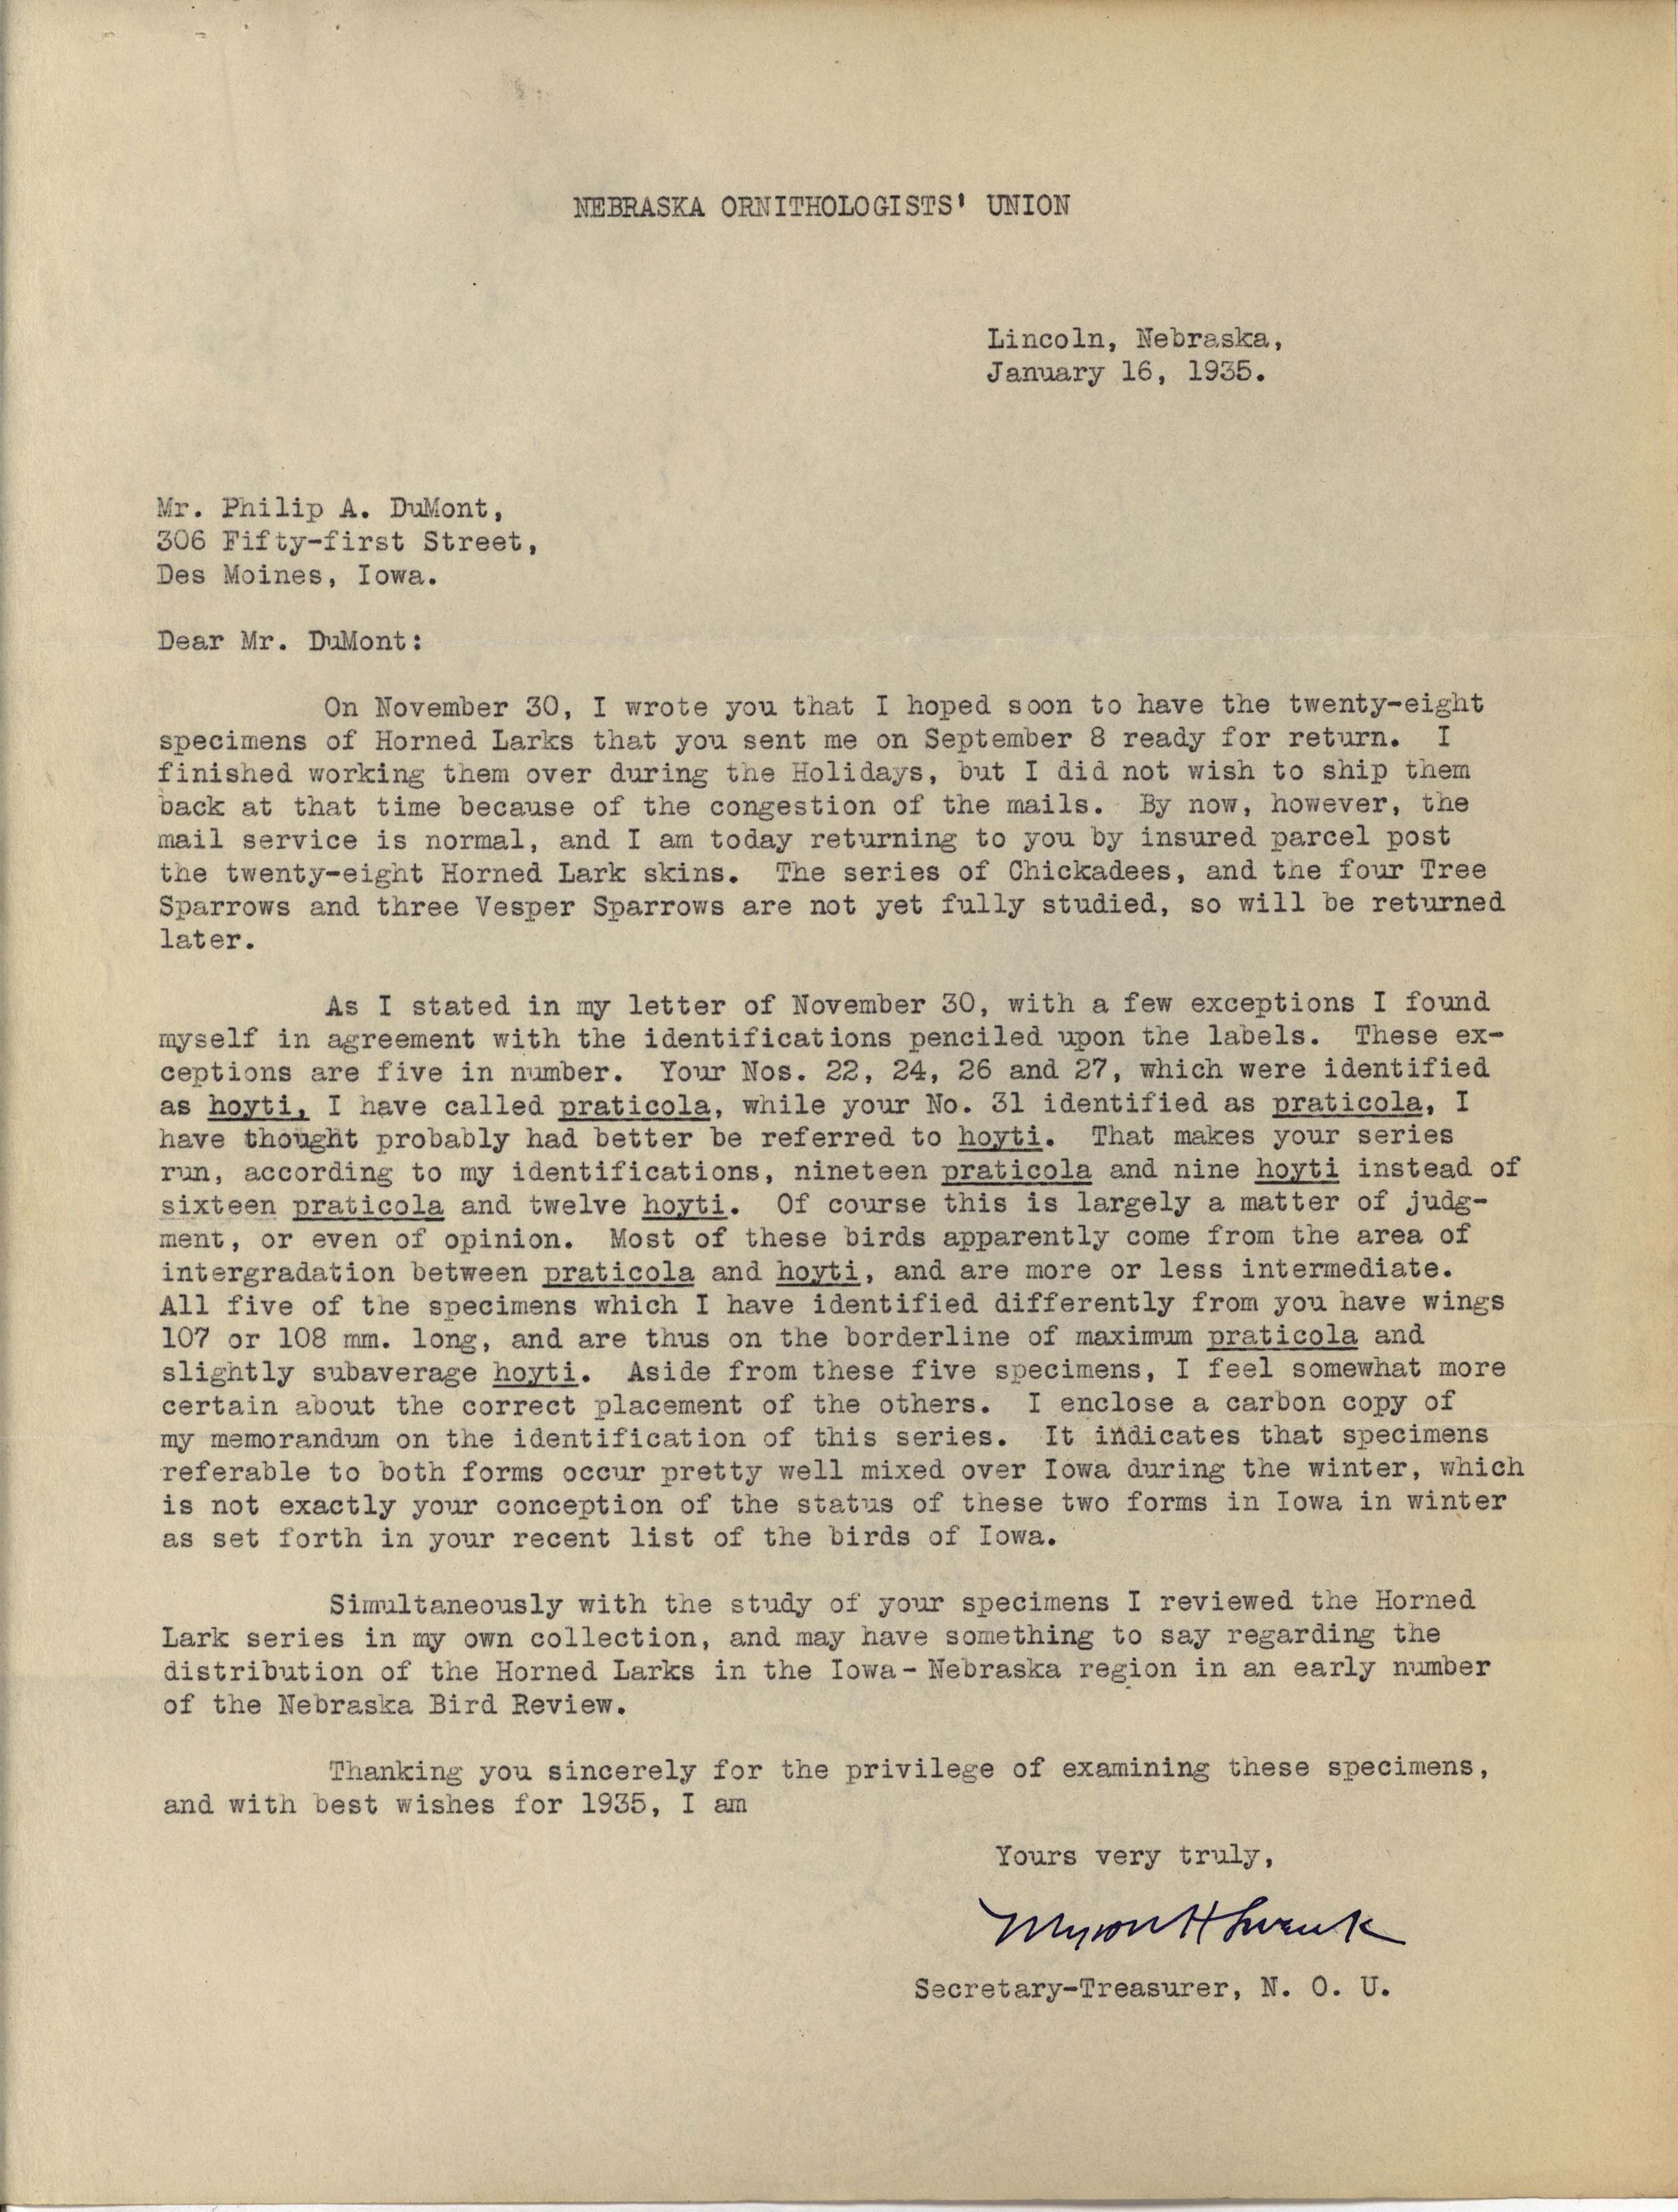 Myron Swenk letter to Philip DuMont regarding specimens, January 16, 1935